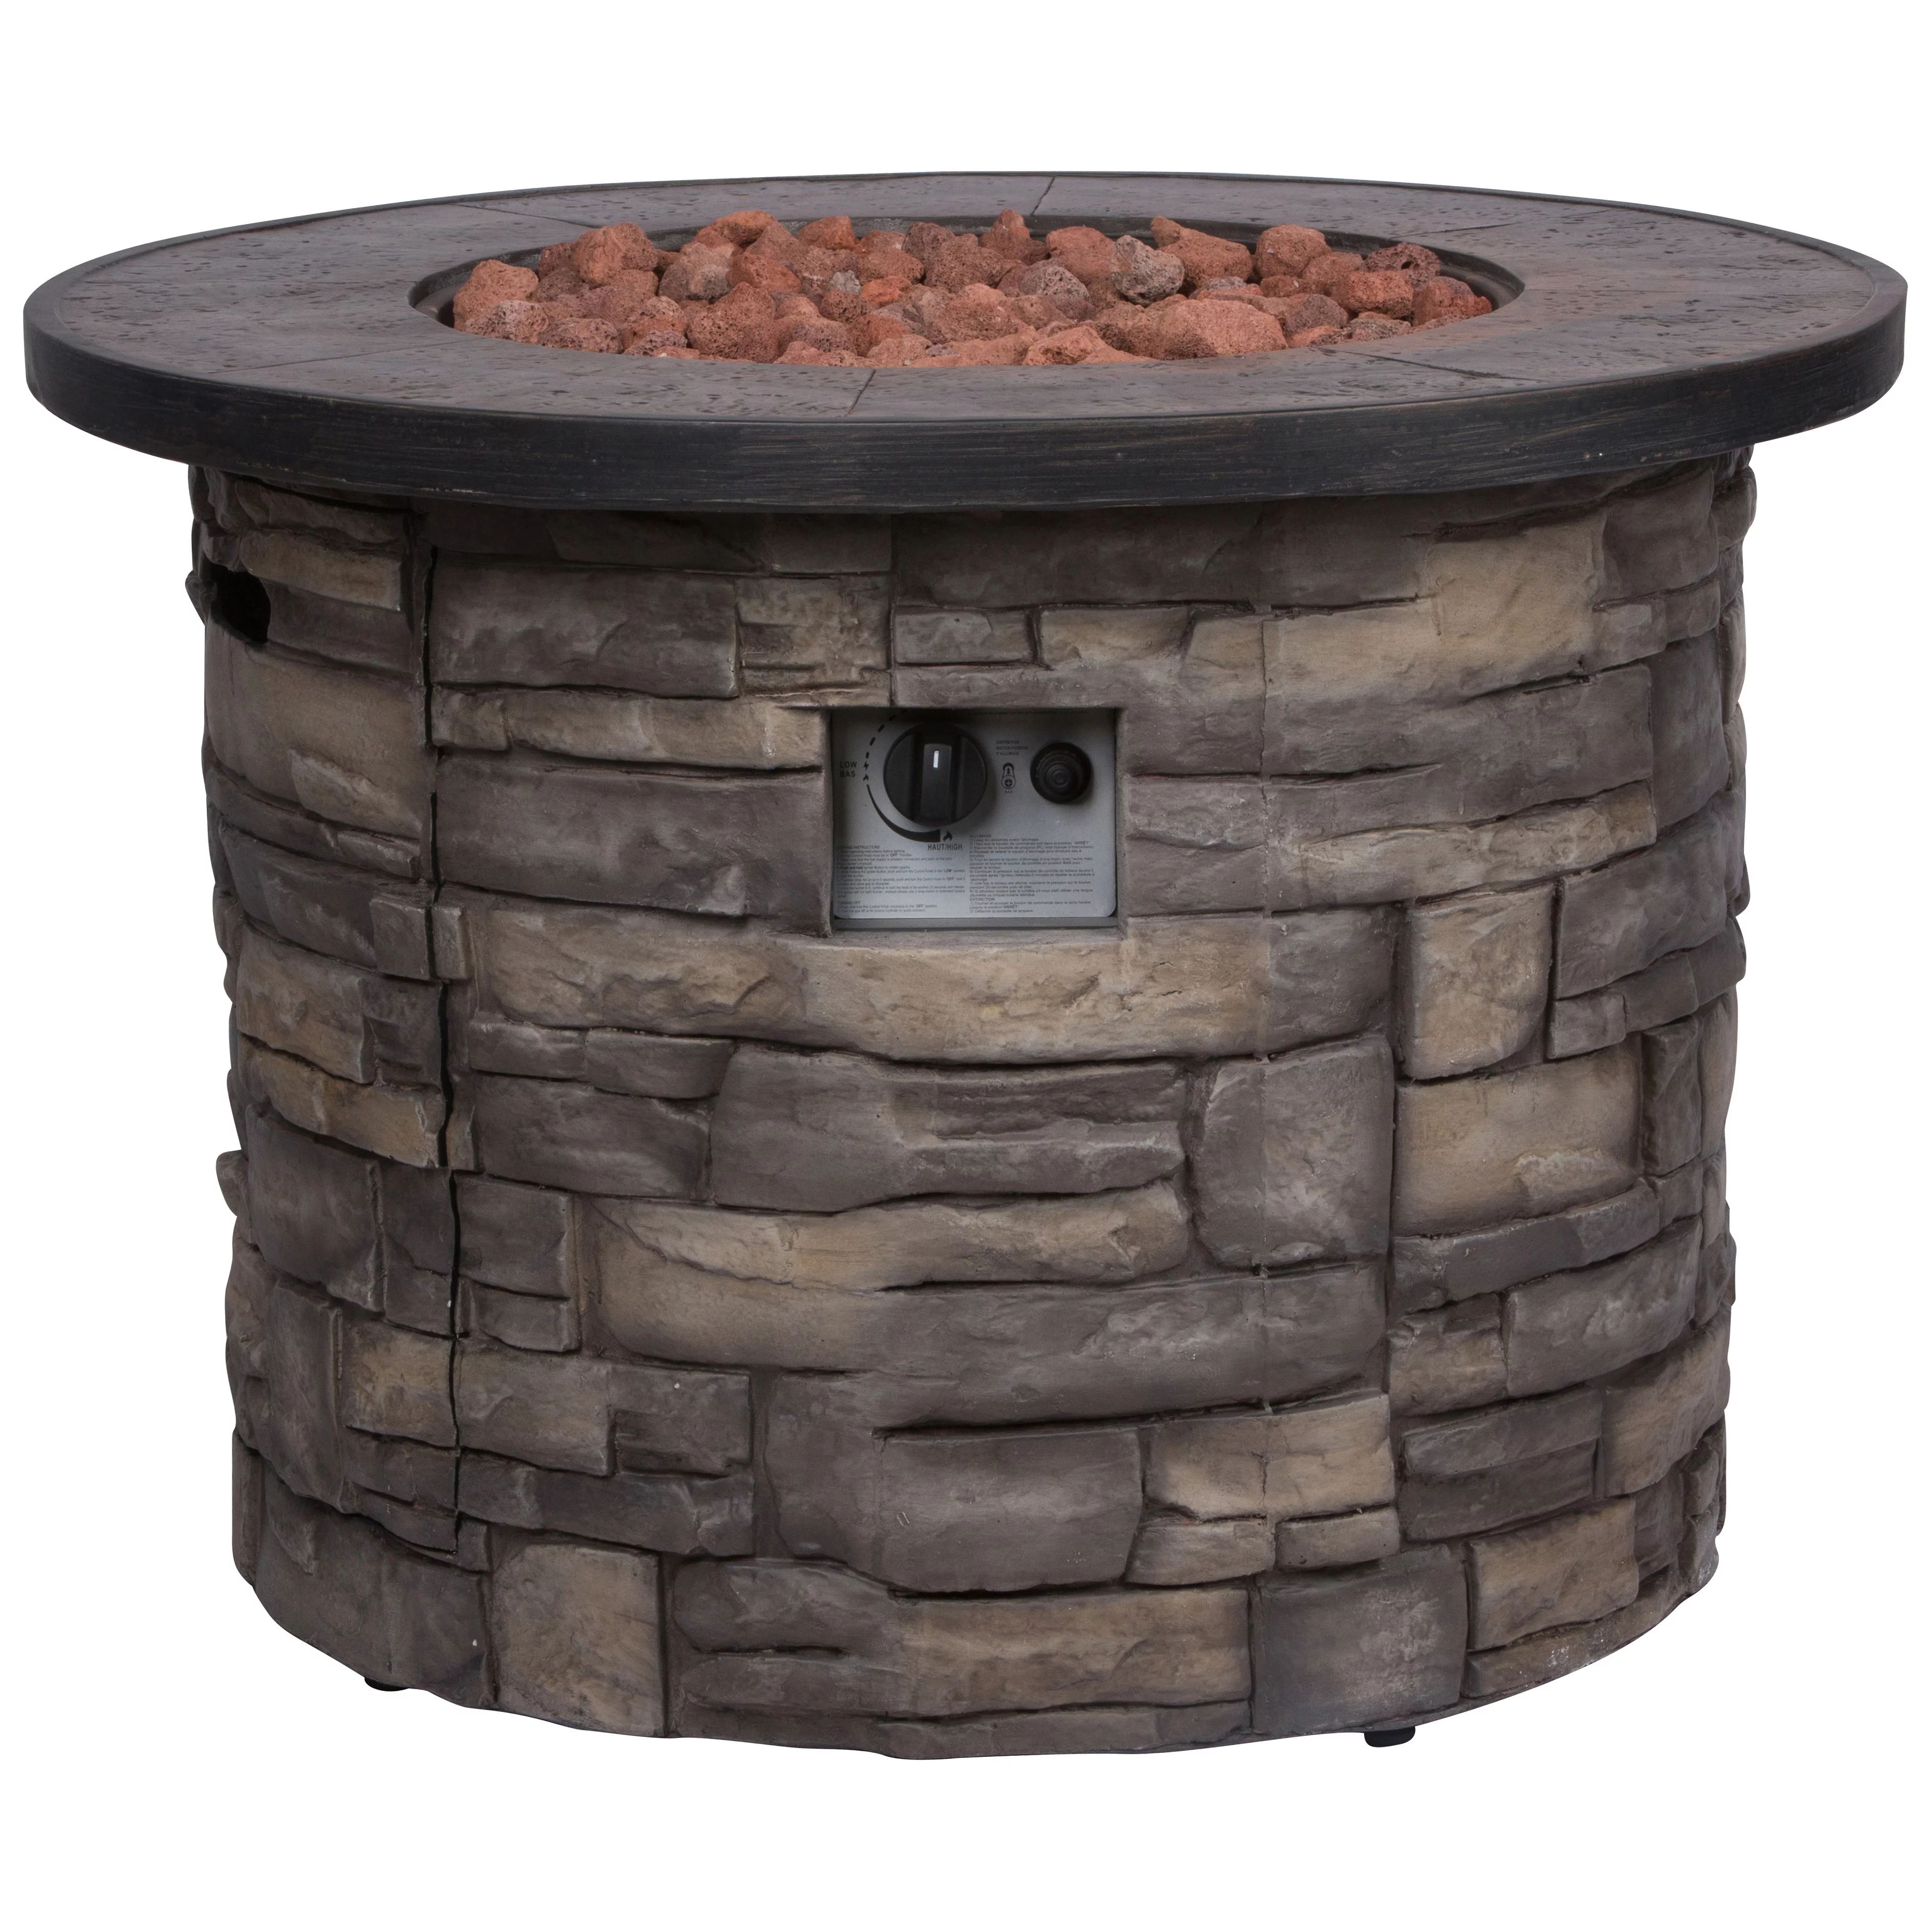 Shine Company Sevilla 35 in. Round Outdoor Fire Pit Table - Stone | Walmart (US)